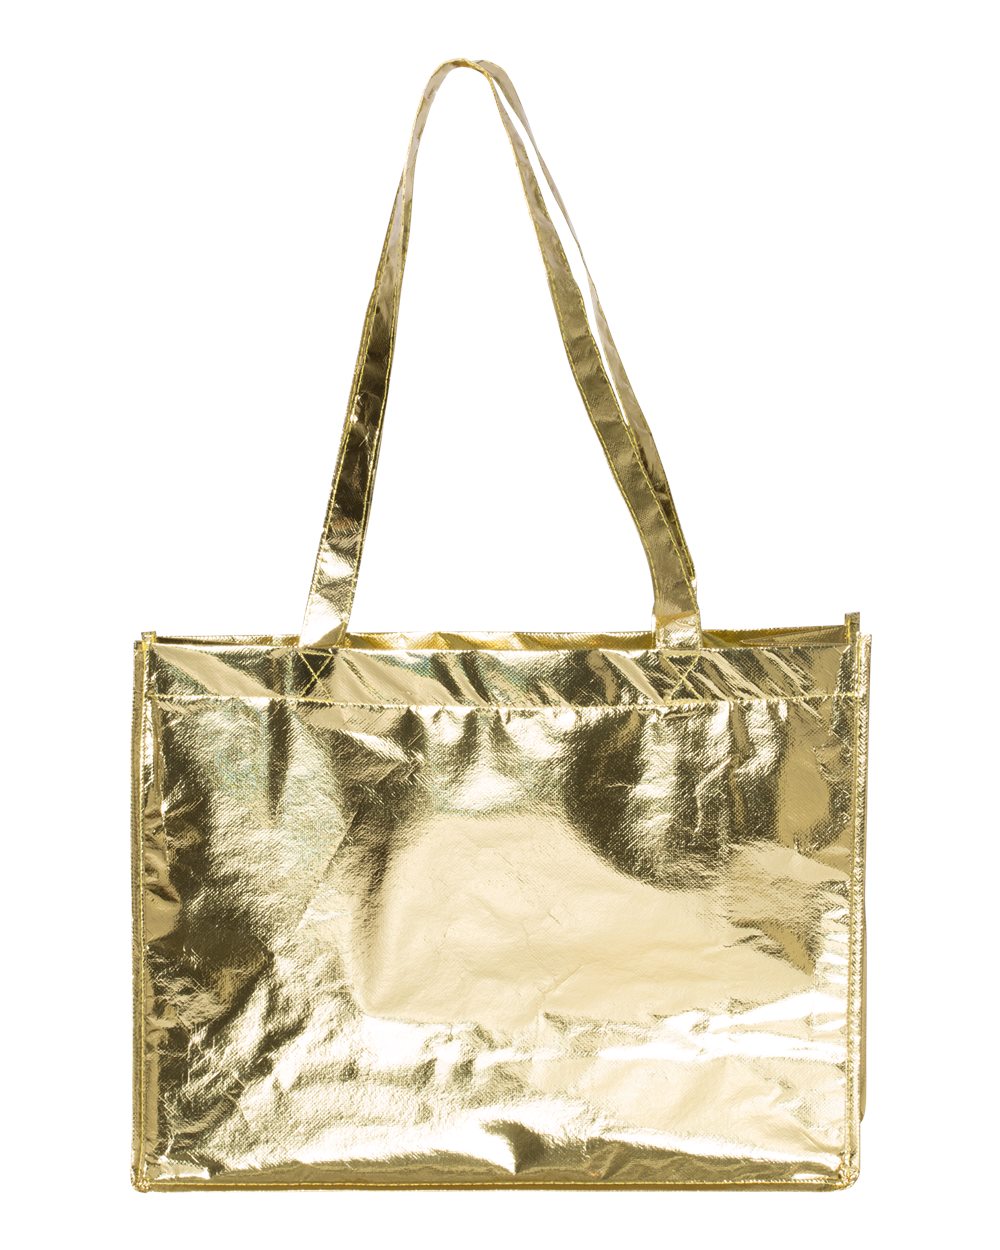 Liberty Bags FT007M Metallic Can Holder - Metallic Gold - Os